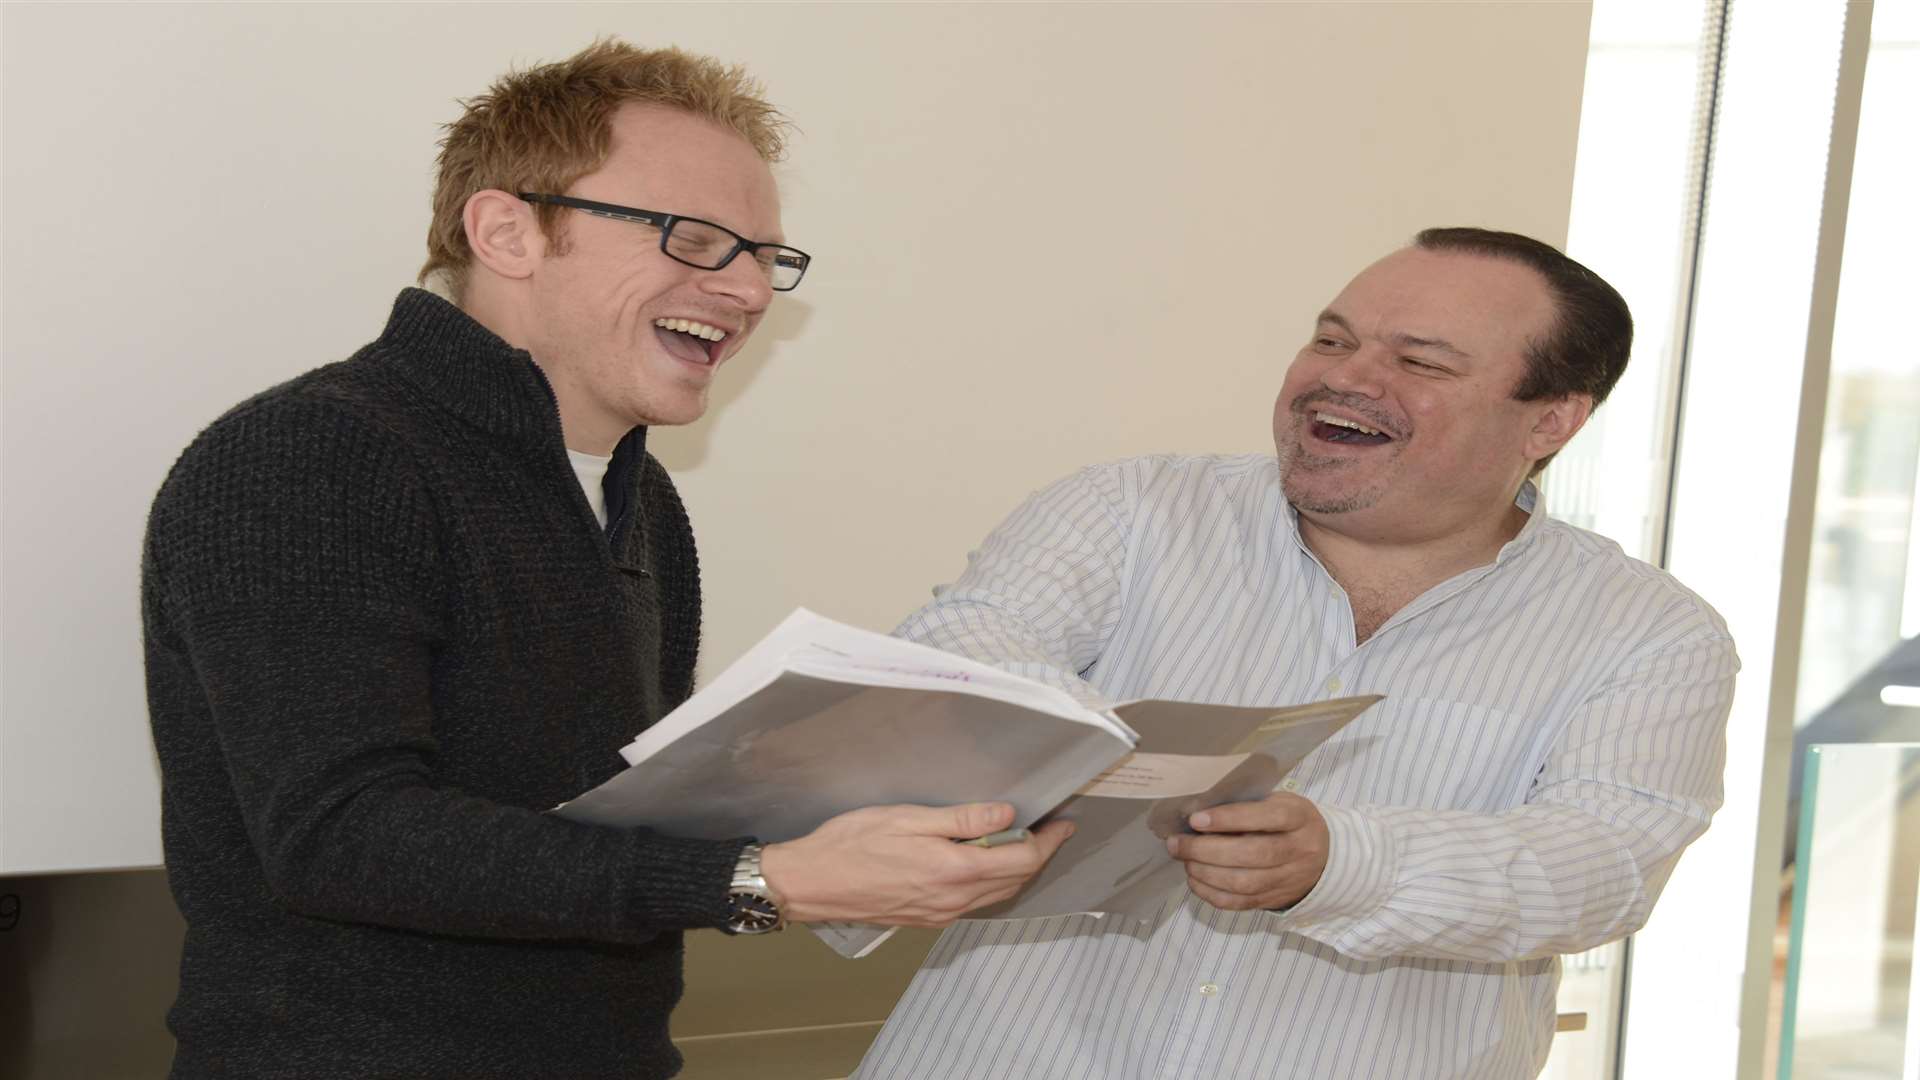 Lloyd Hollett and Shaun Williamson share a joke during rehearsals